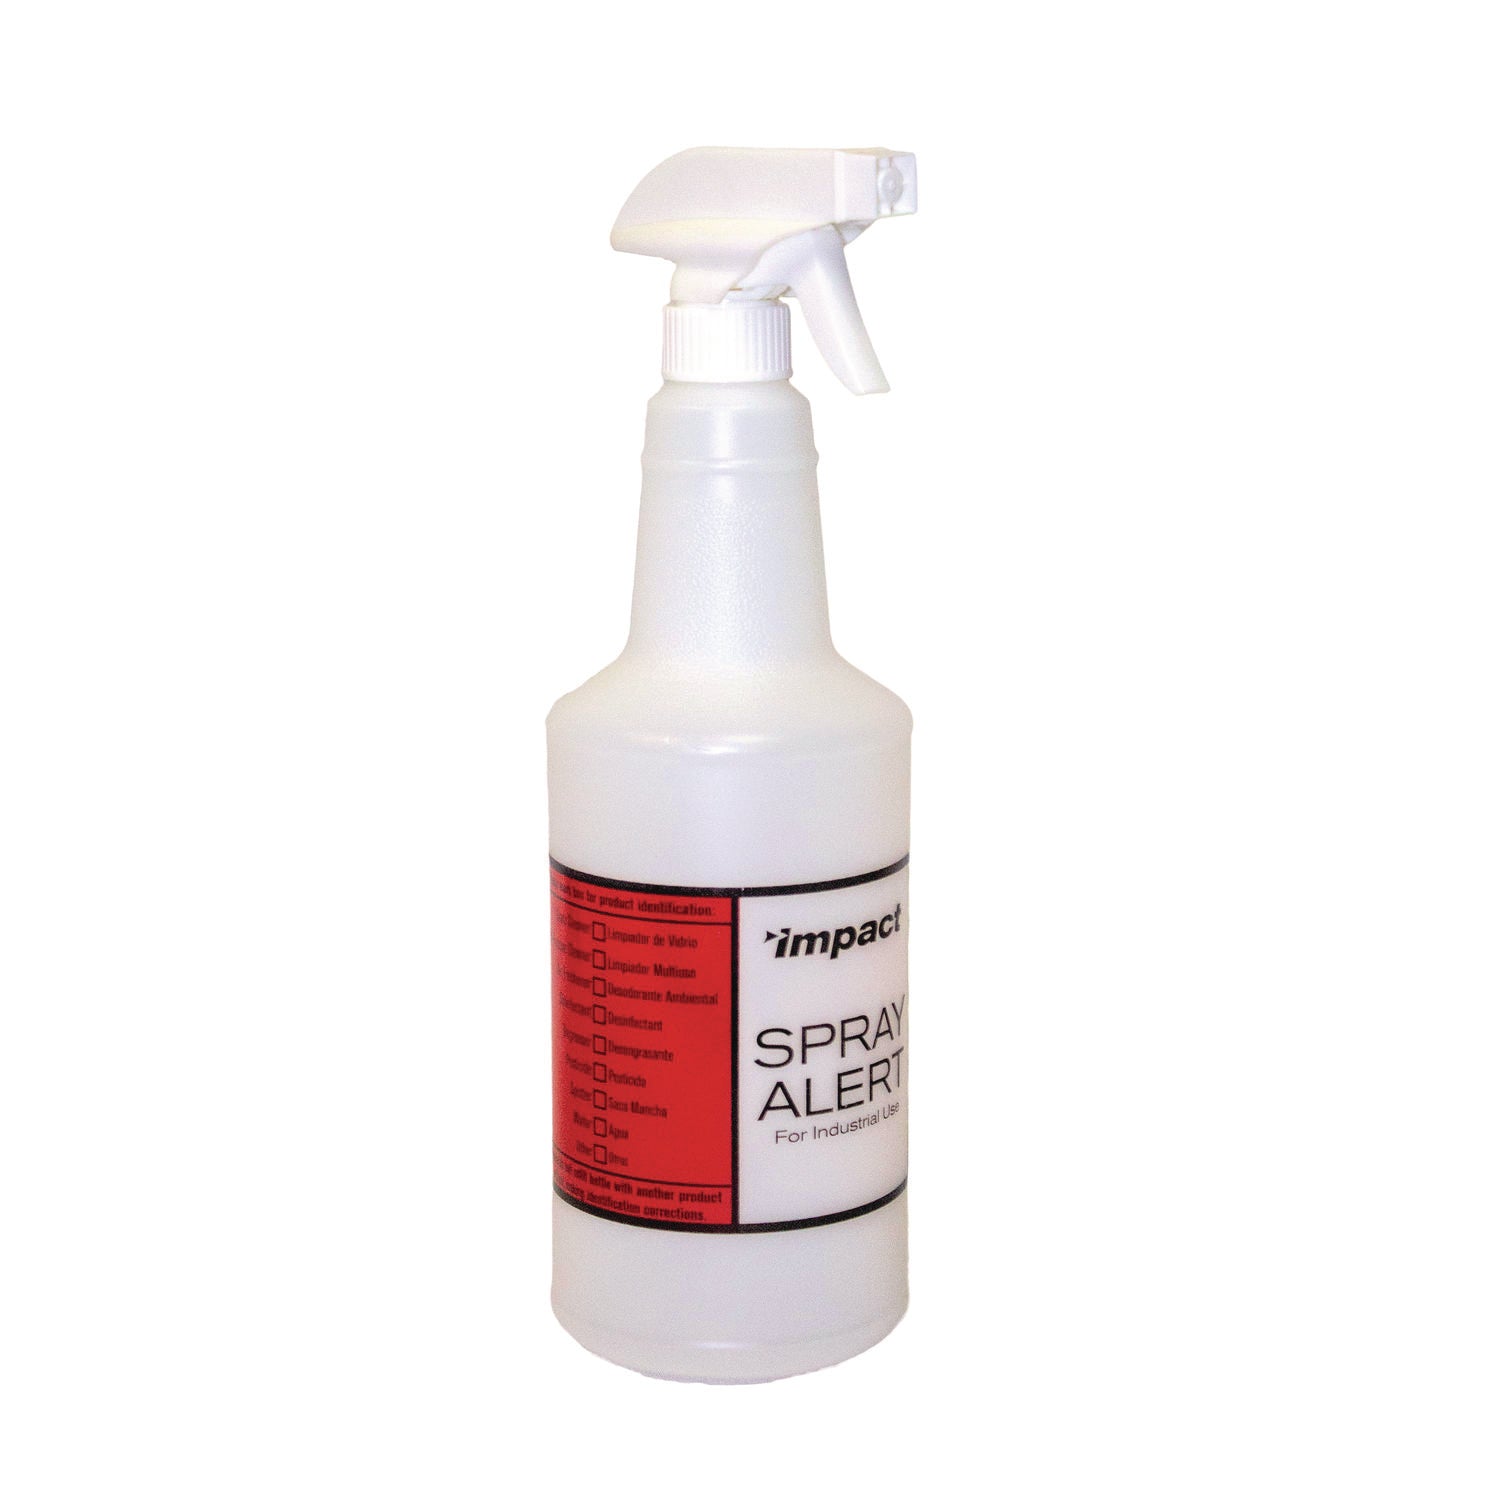 Spray Alert System, 32 oz, Natural with White/White Sprayer, 24/Carton - 4